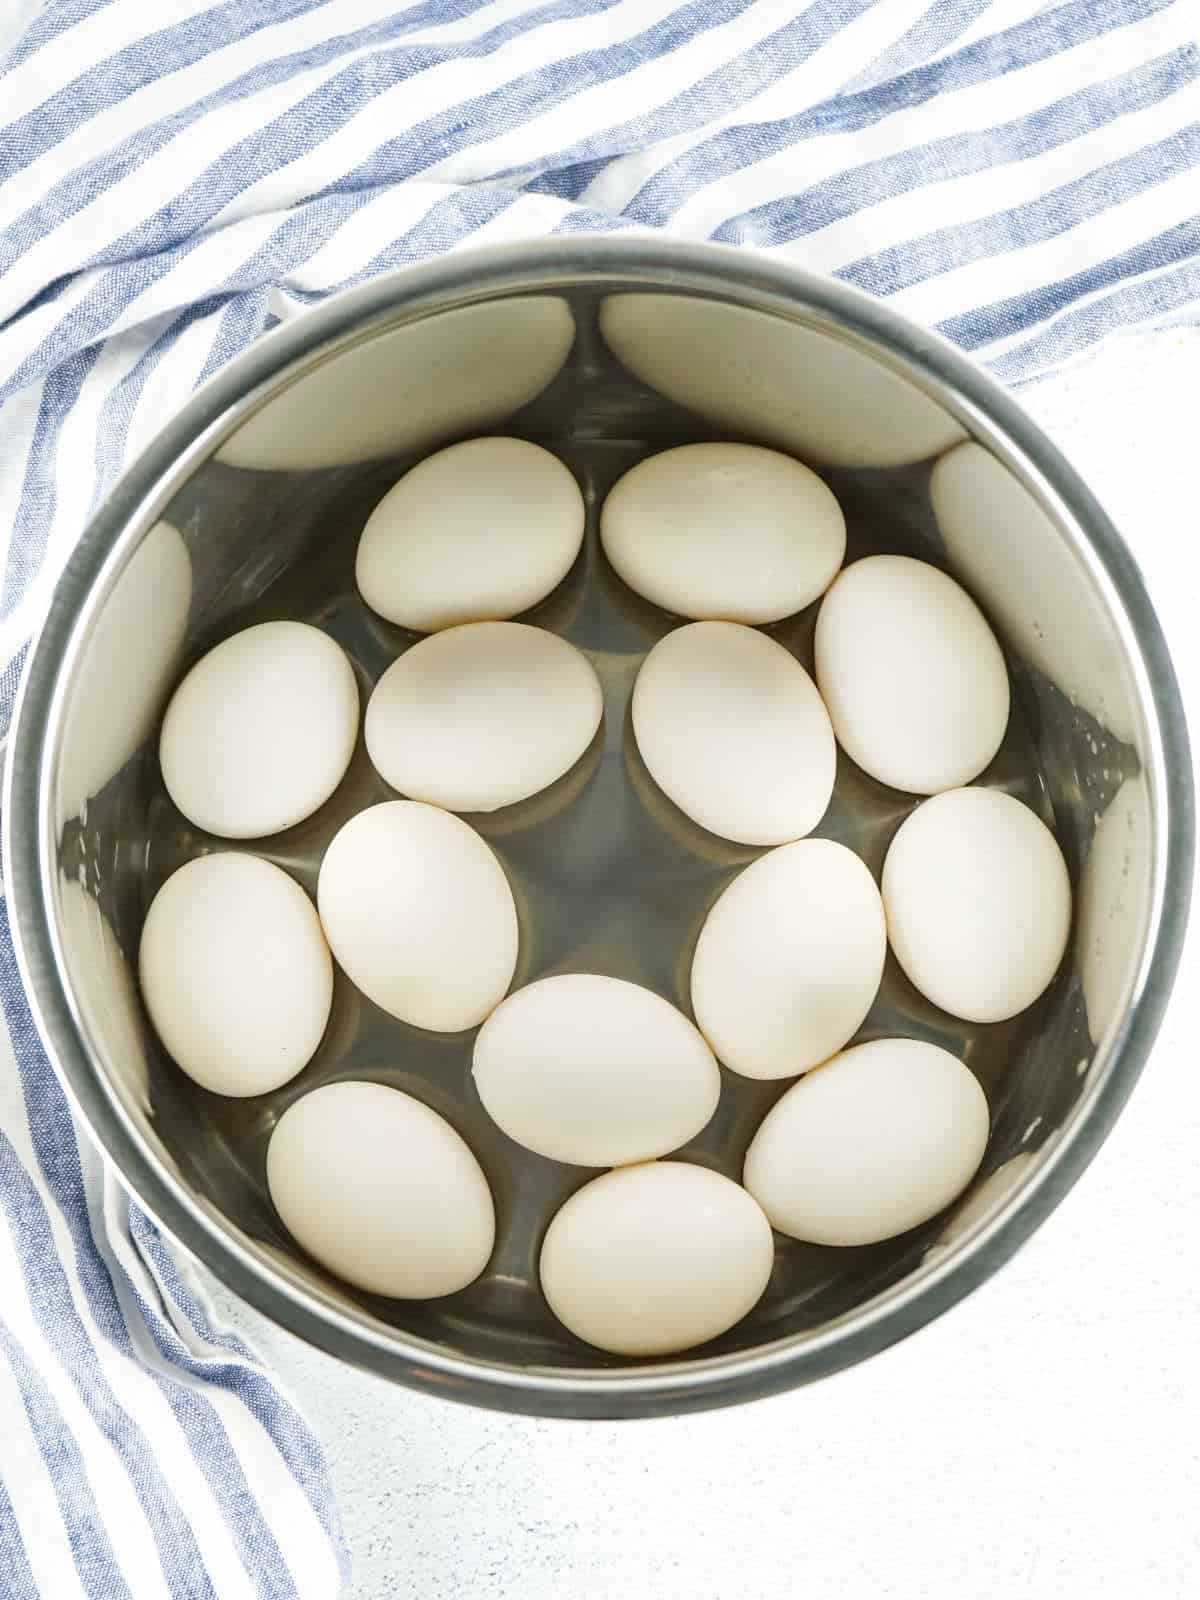 Instant Pot insert pan with a dozen white eggs inside.